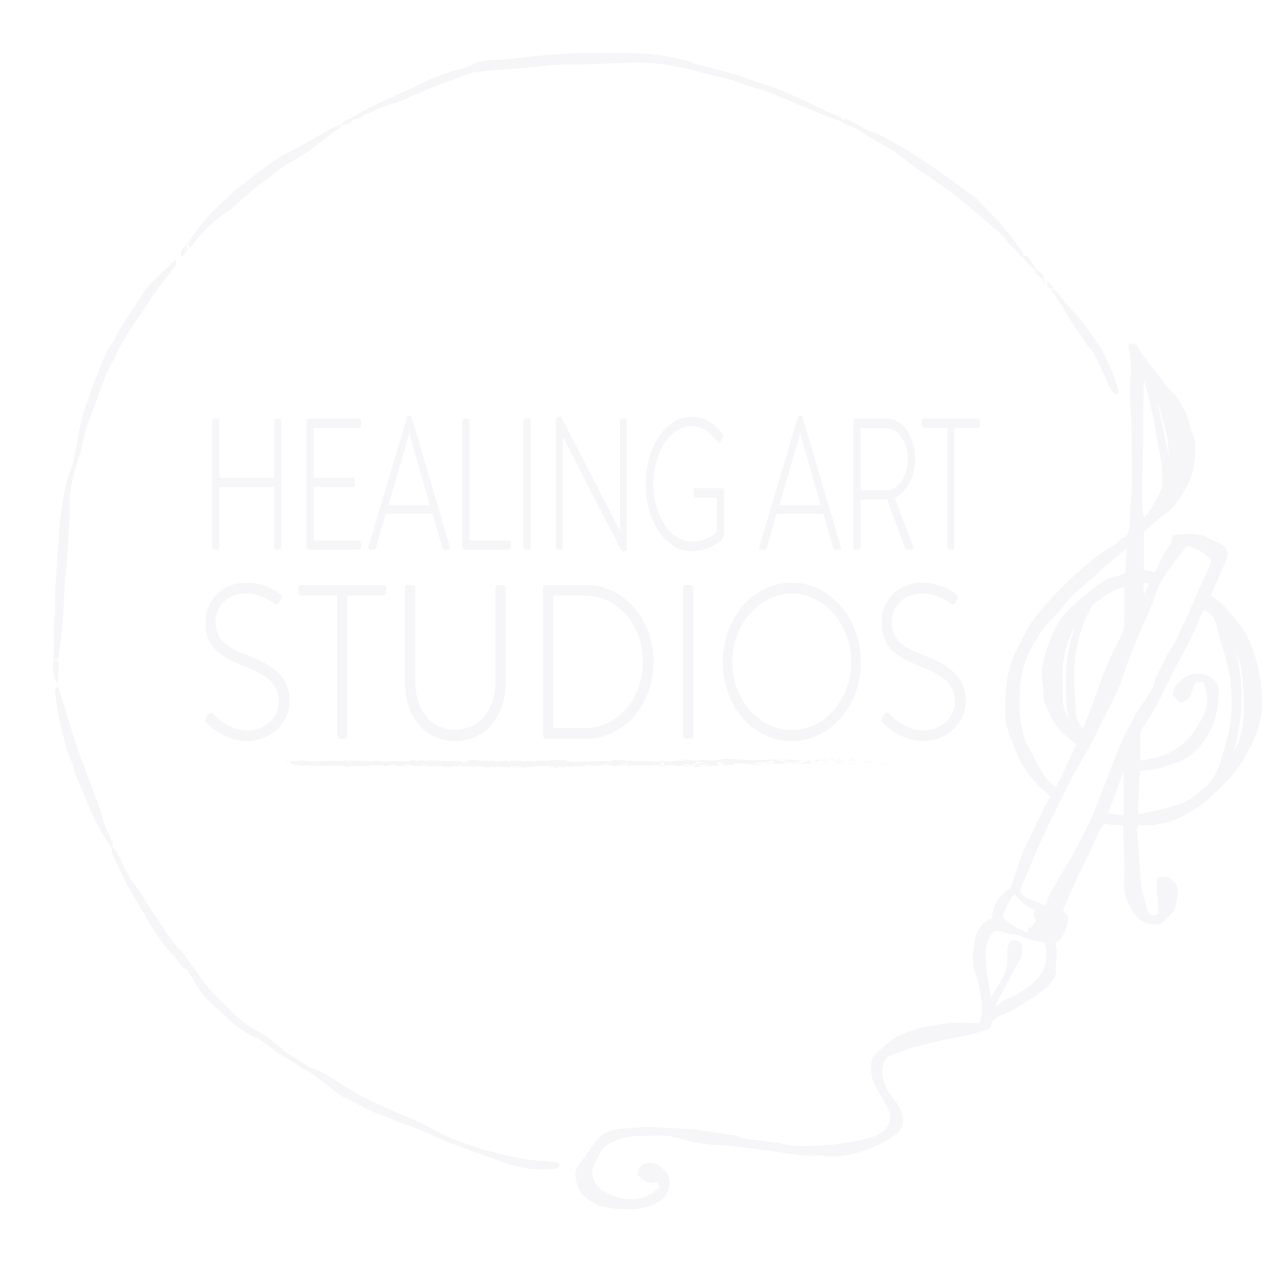 Healing Art Studios